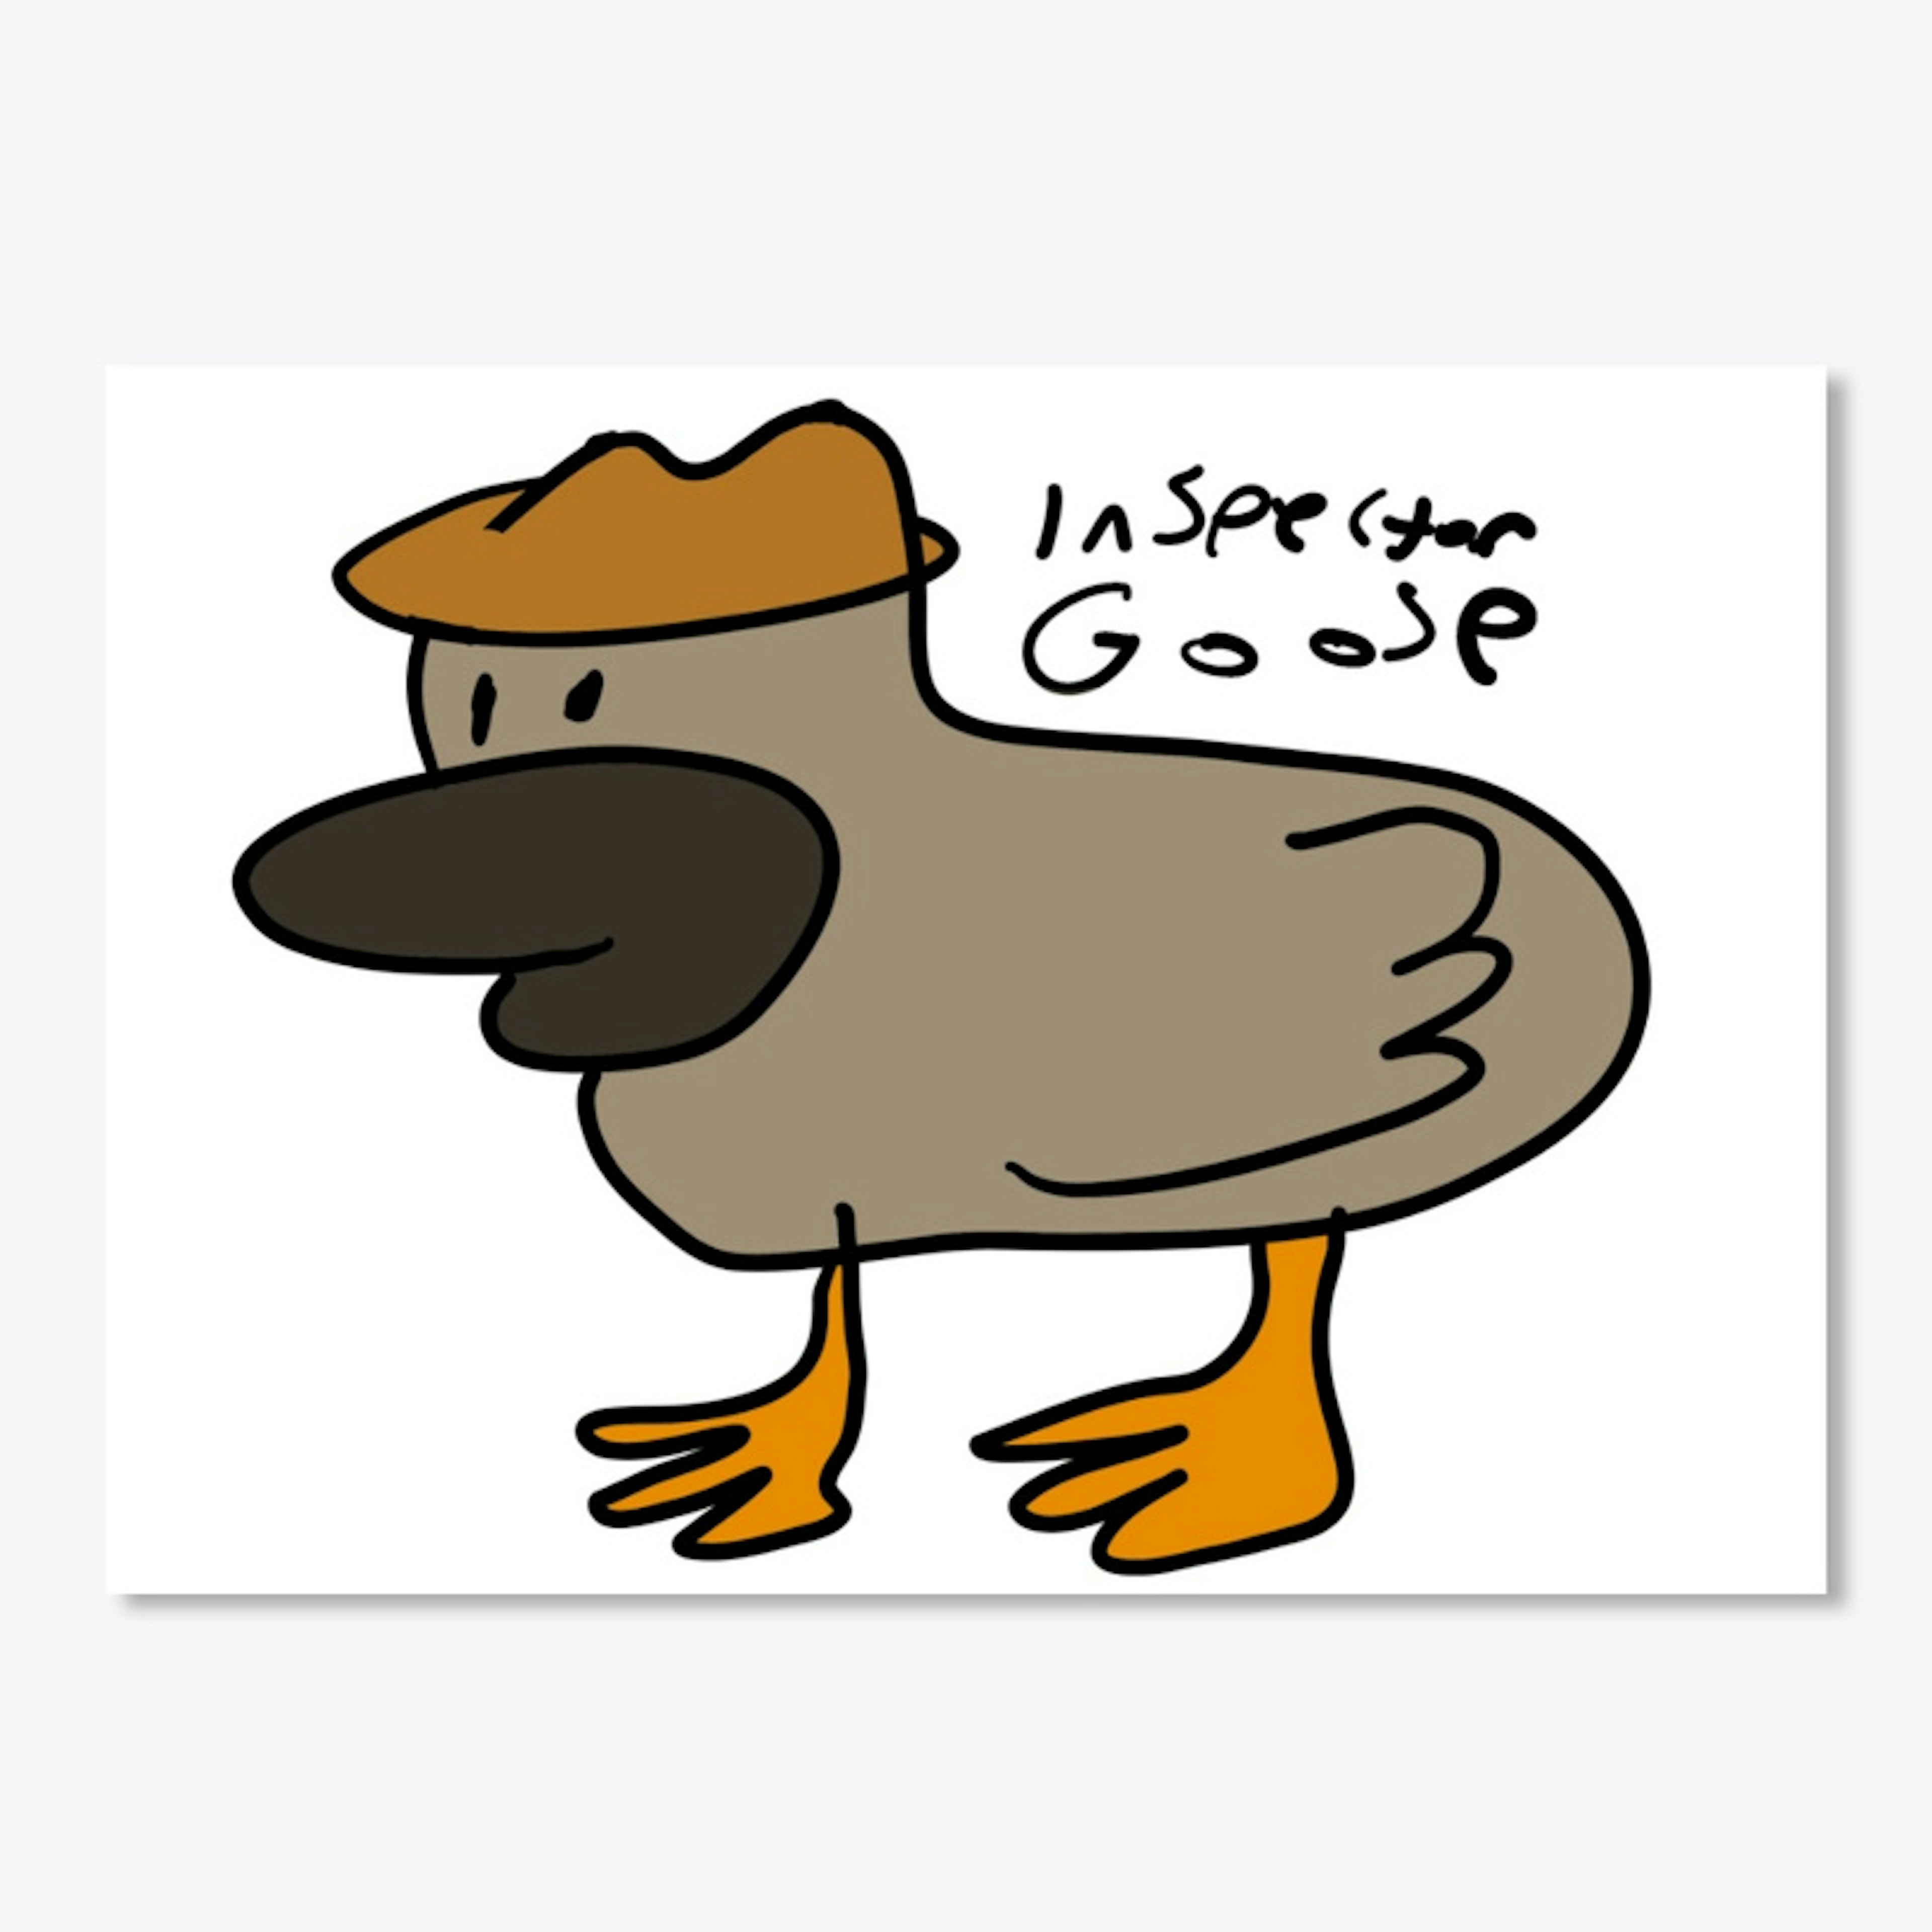 Inspector Goose